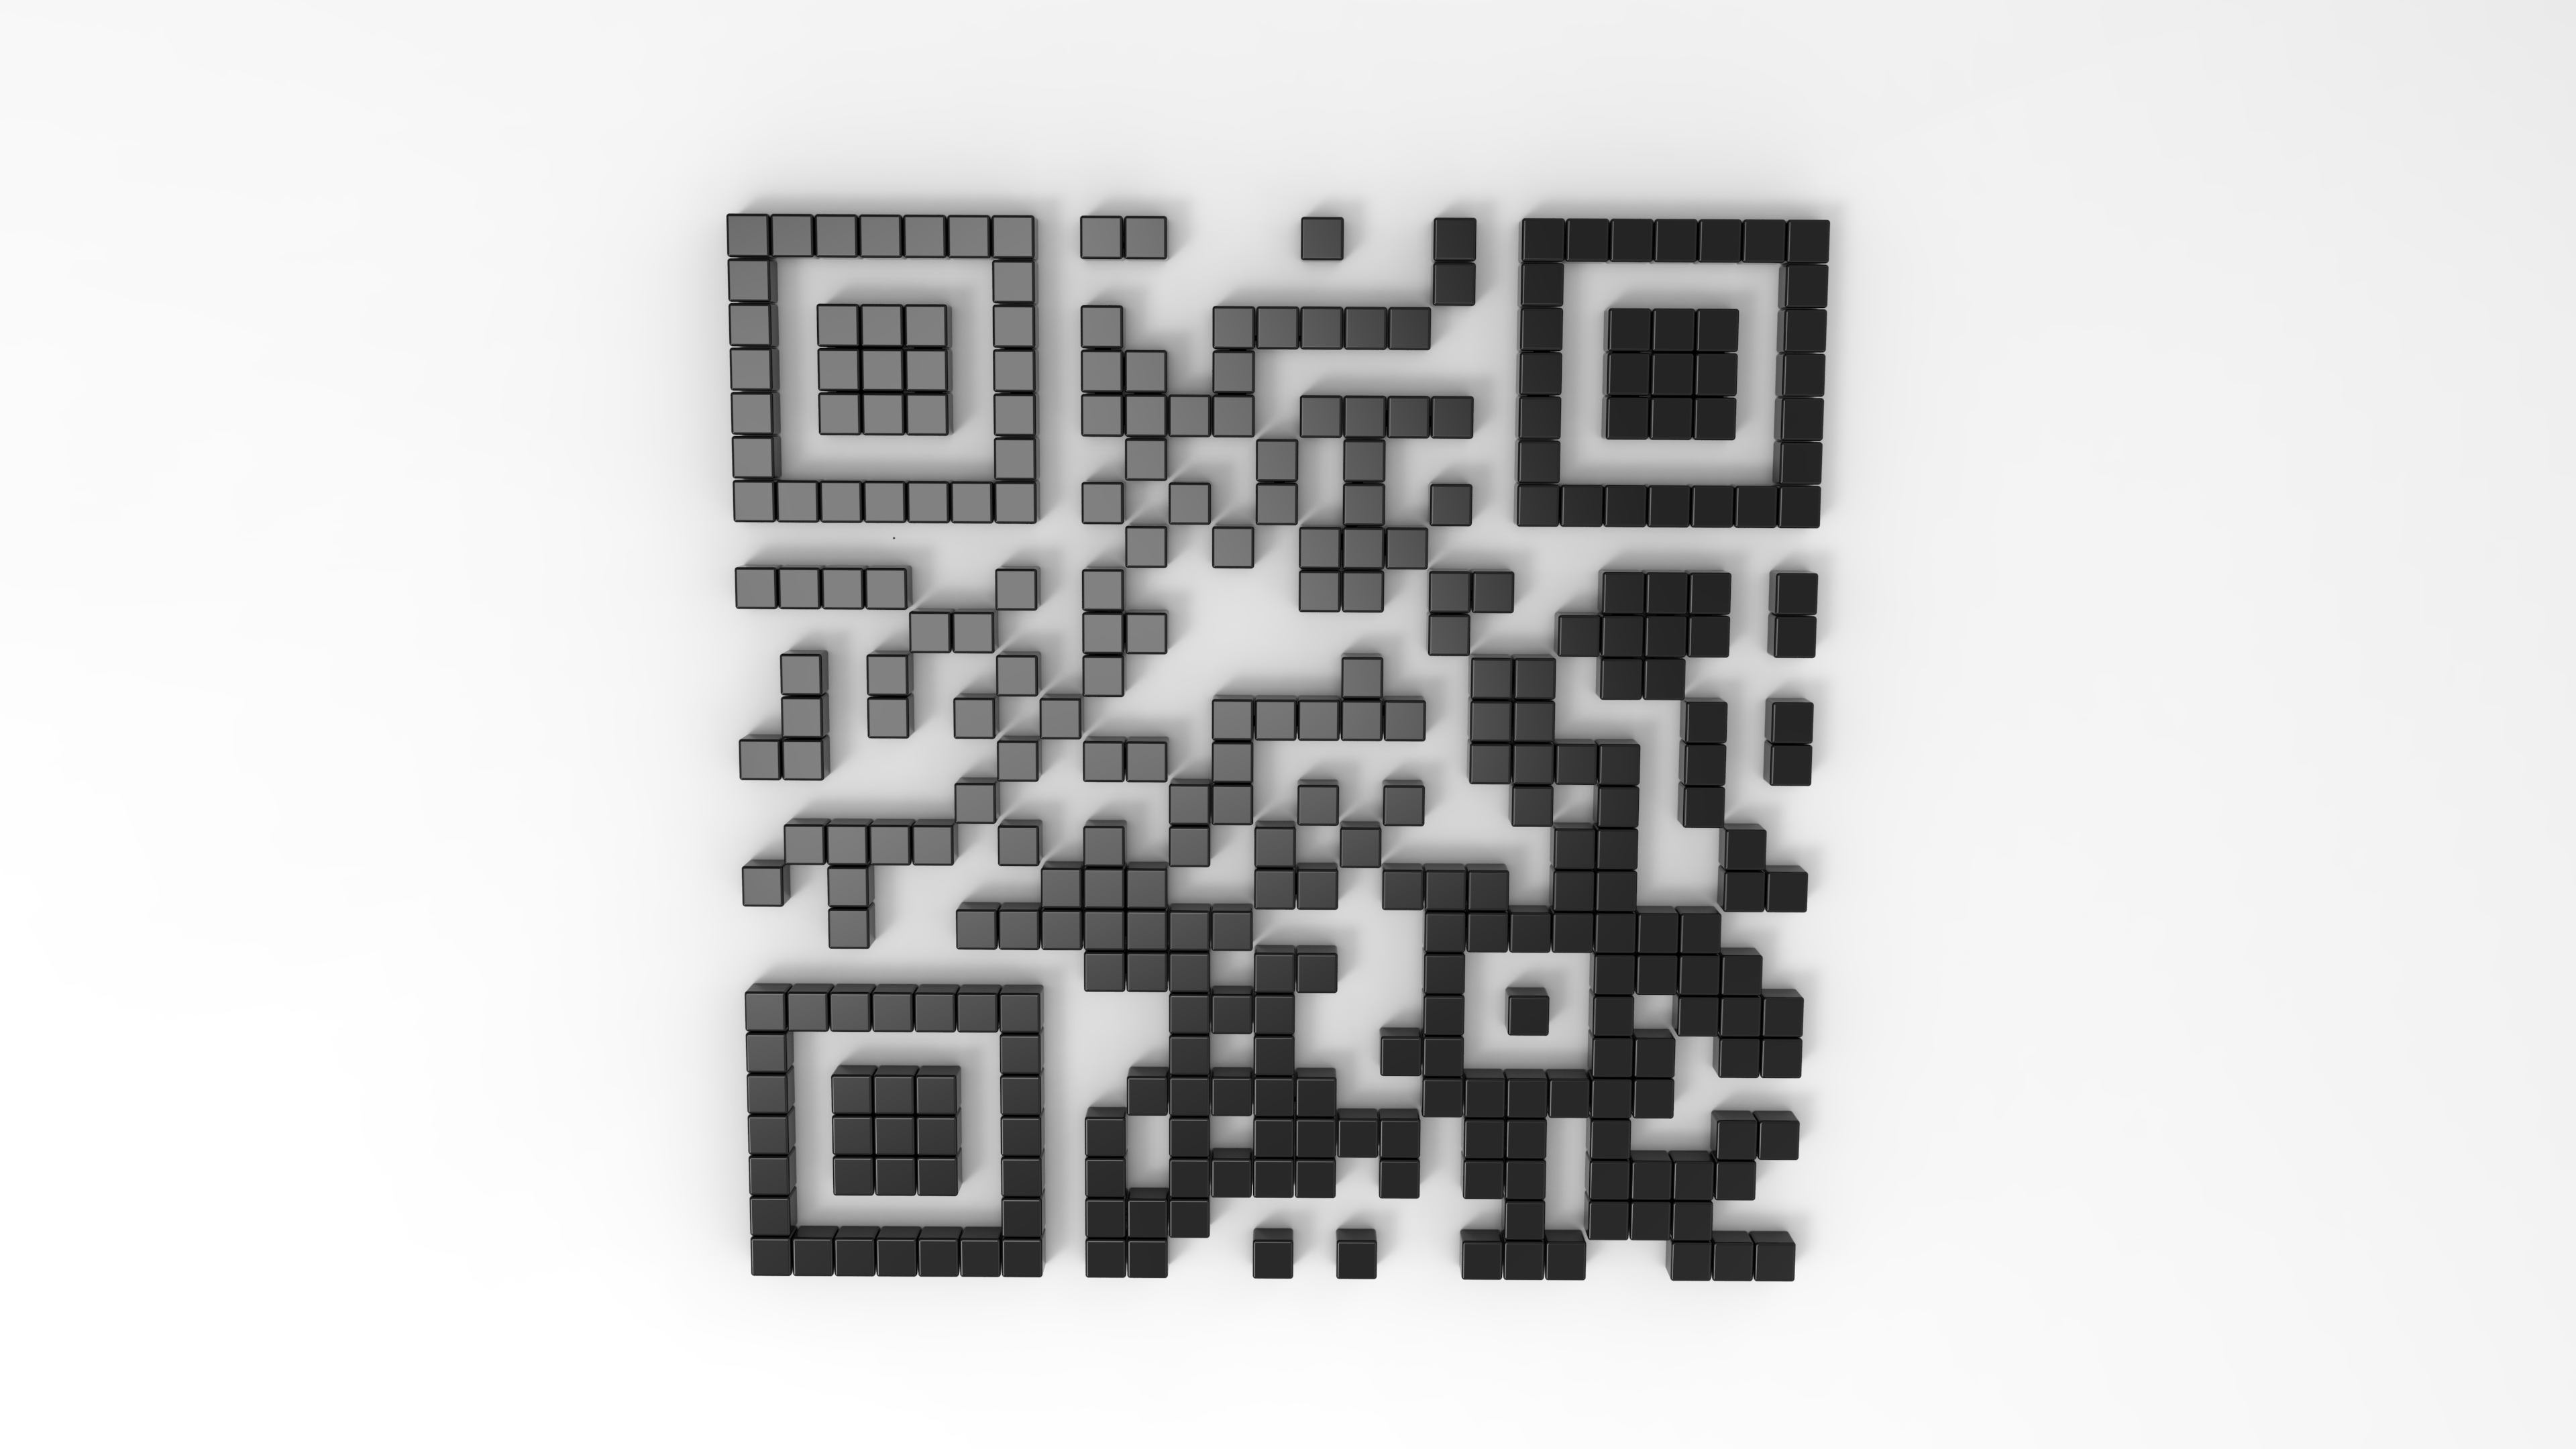 Теле2 qr код. 3д QR код. D&S люстра с19450/2+2 QR код. Распечатка QR кодов. Куб с QR кодом.